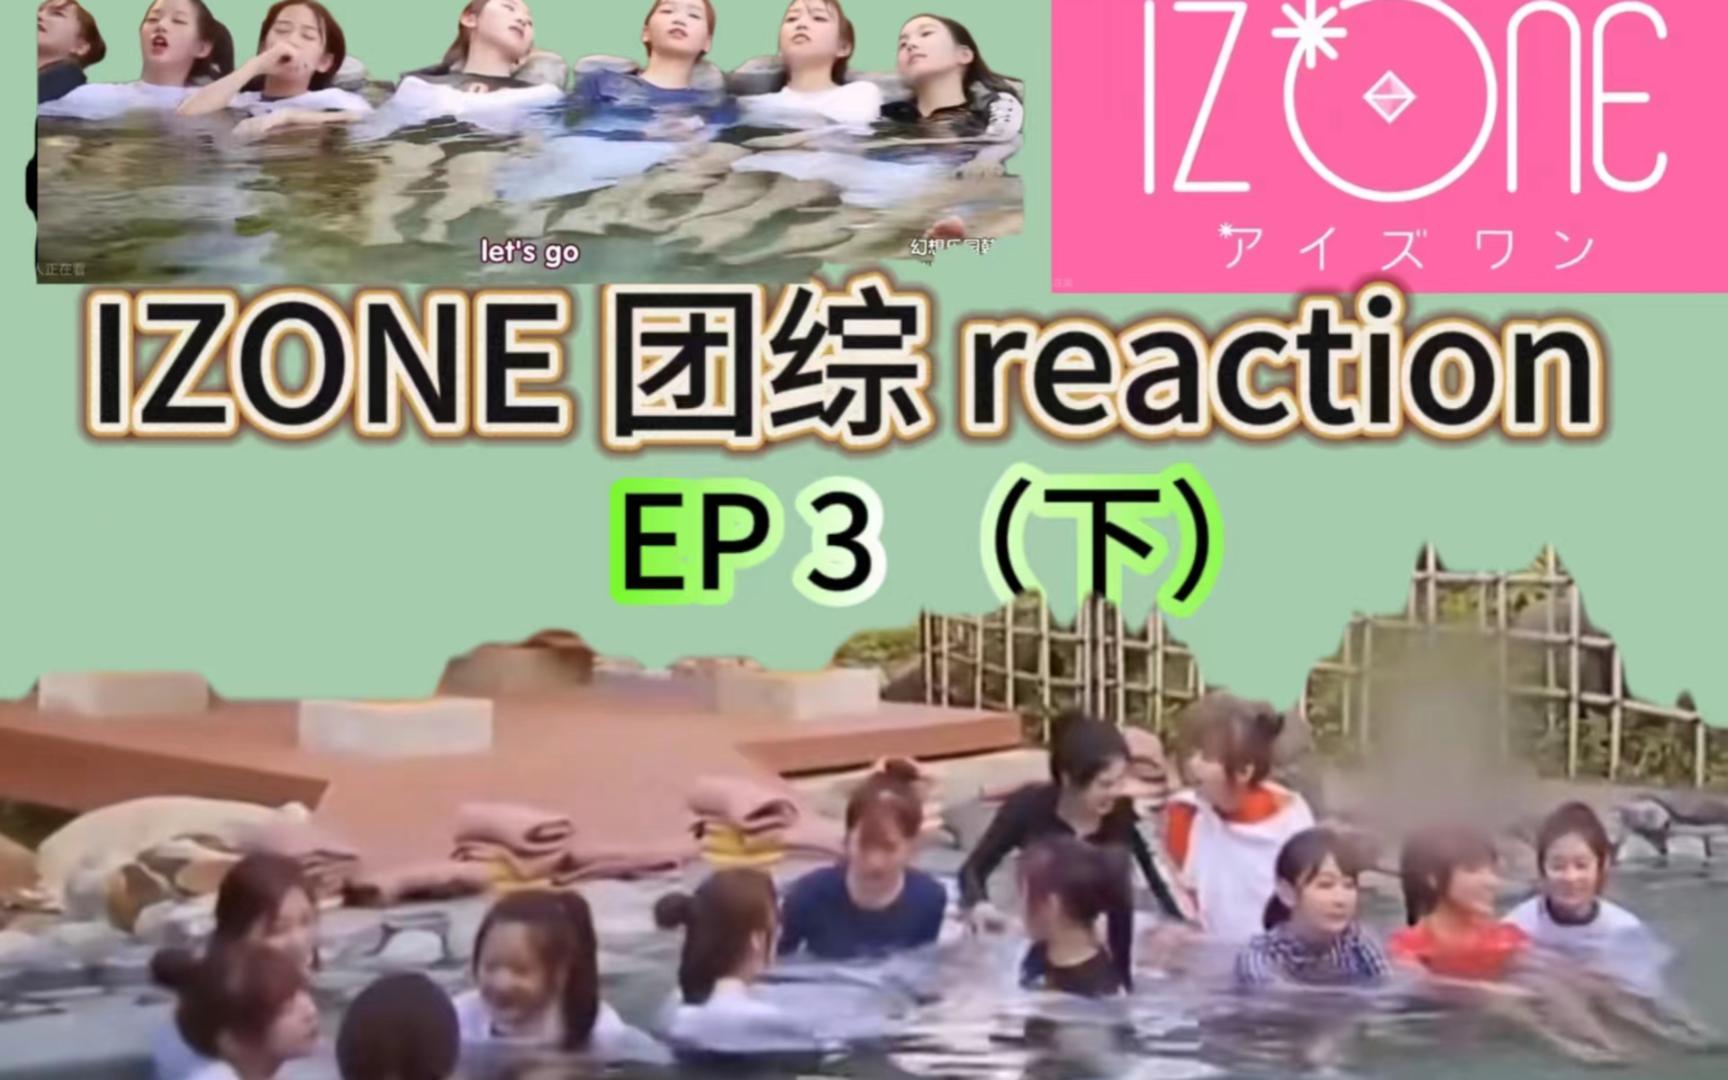 【IZONE团综reaction】EP3（下）可爱、漂亮，超有趣的一集